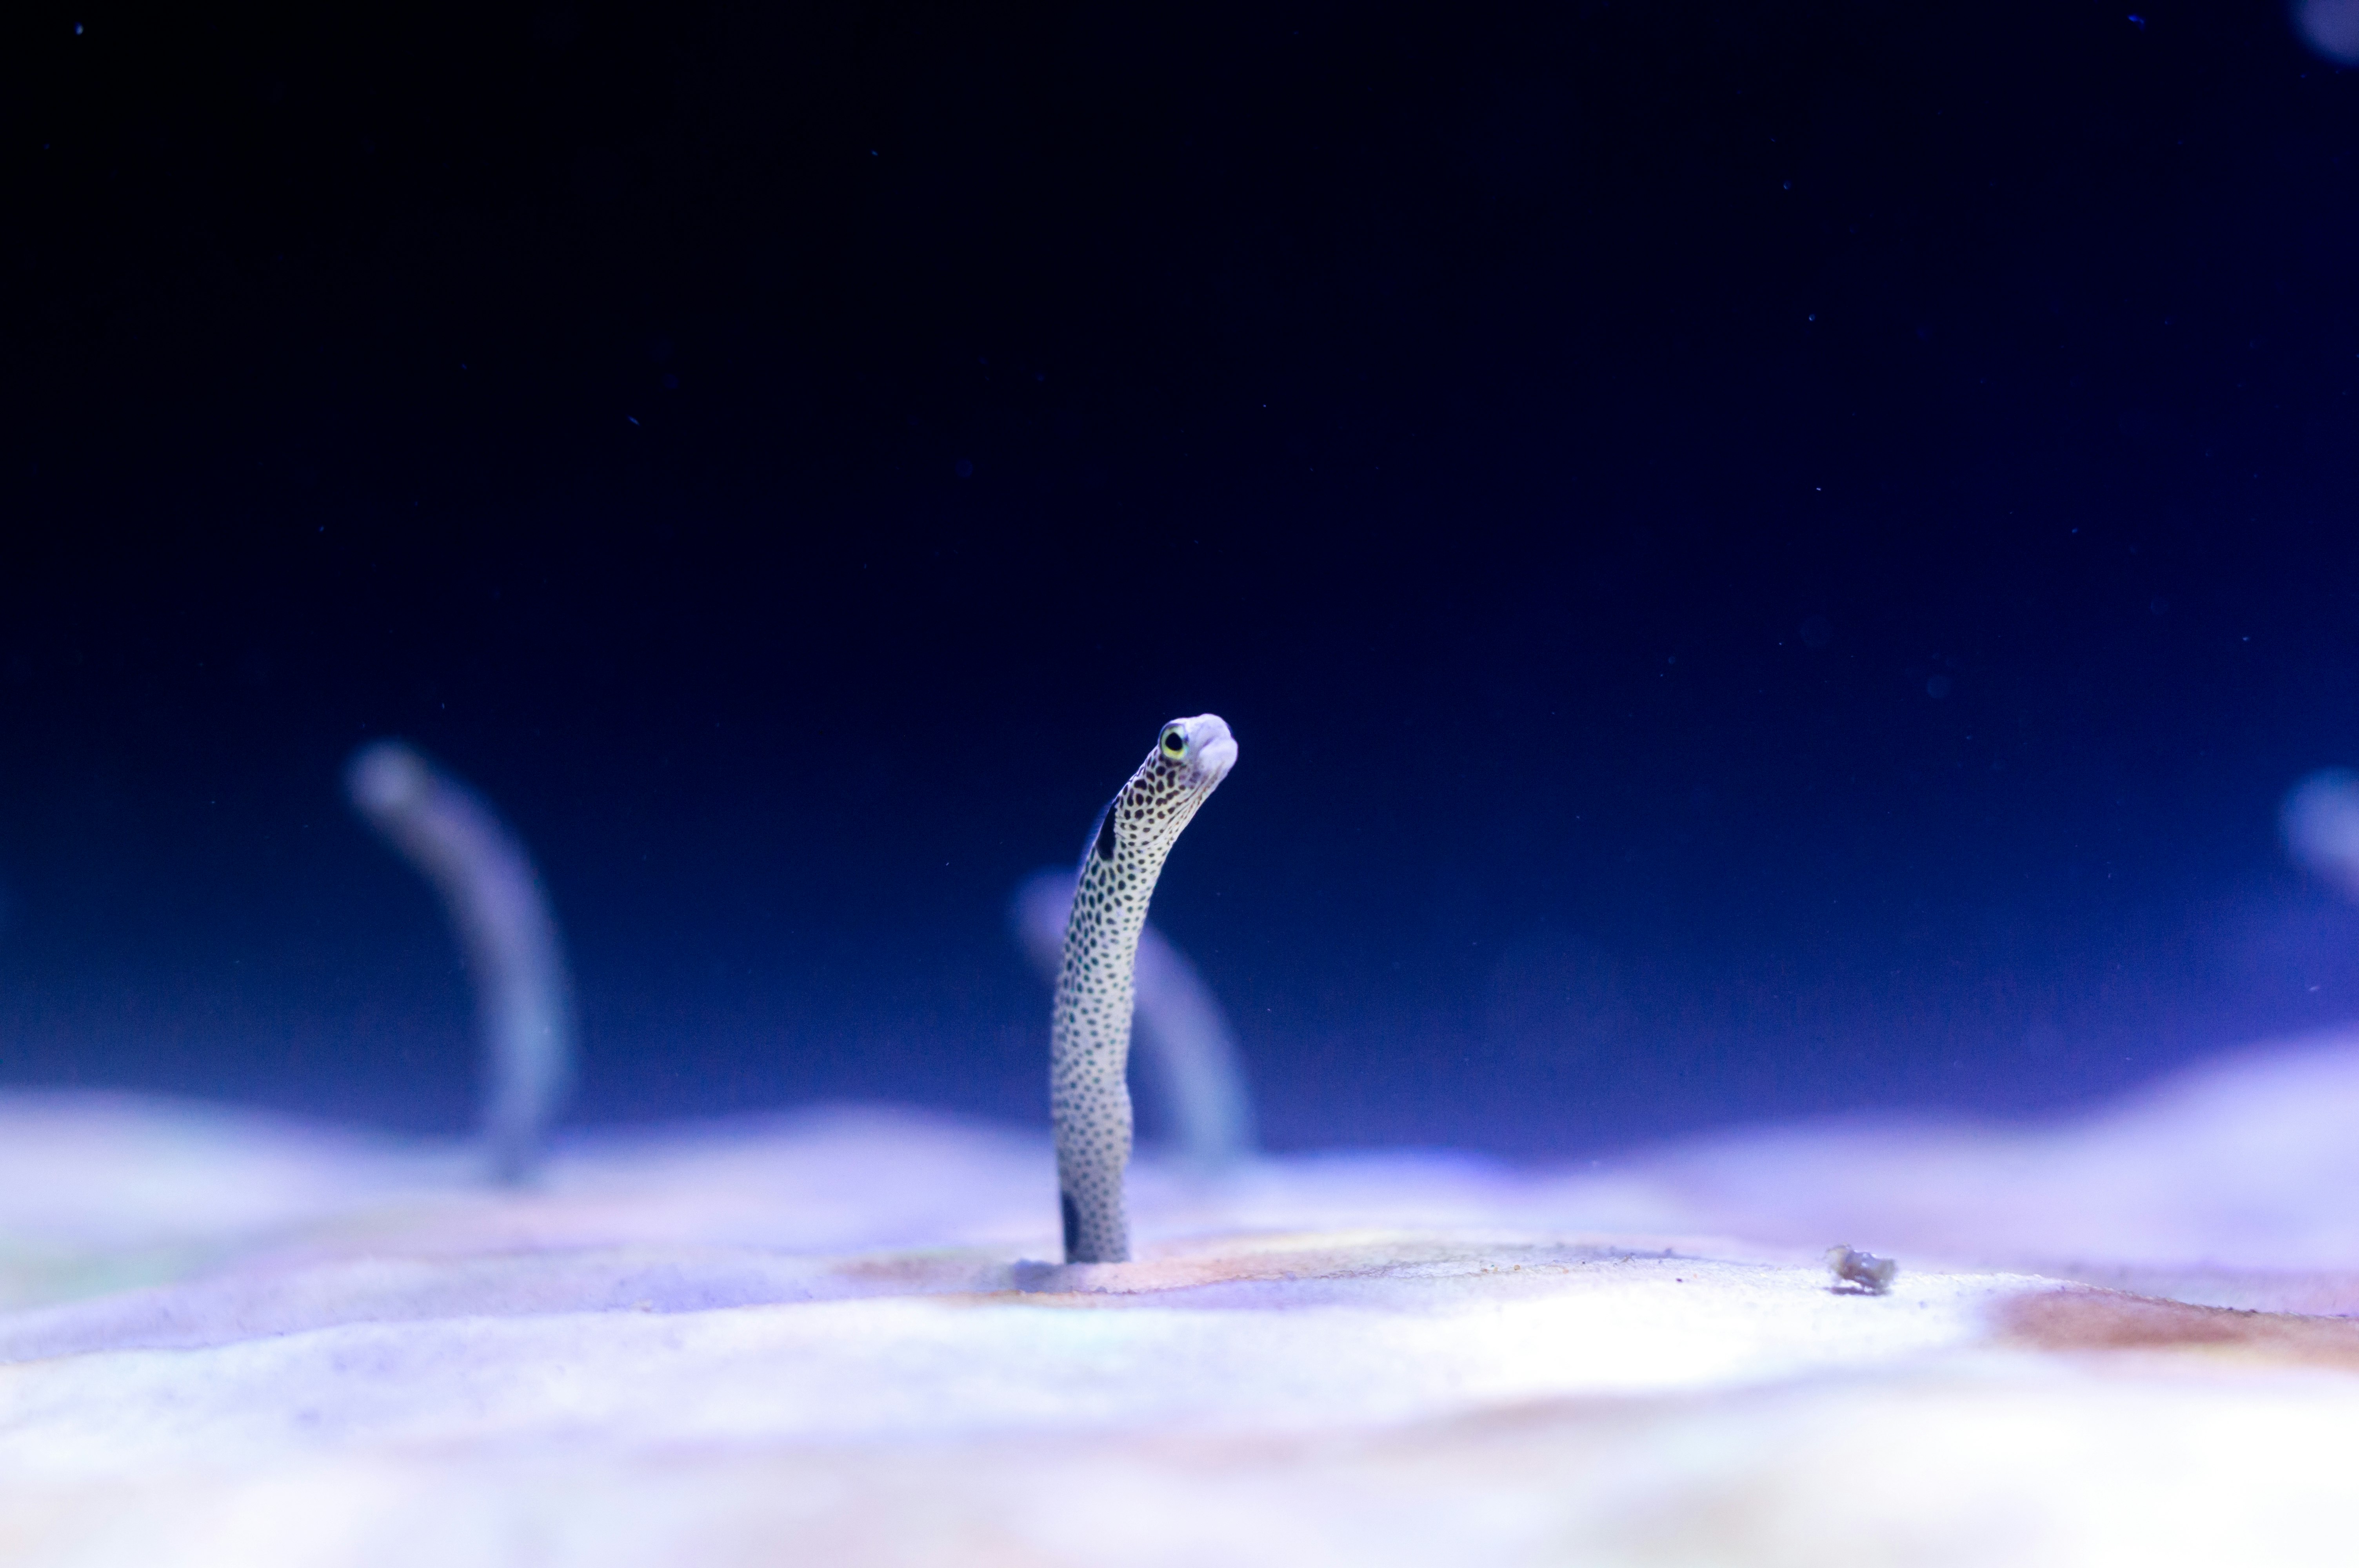 micro photography of white marine creature